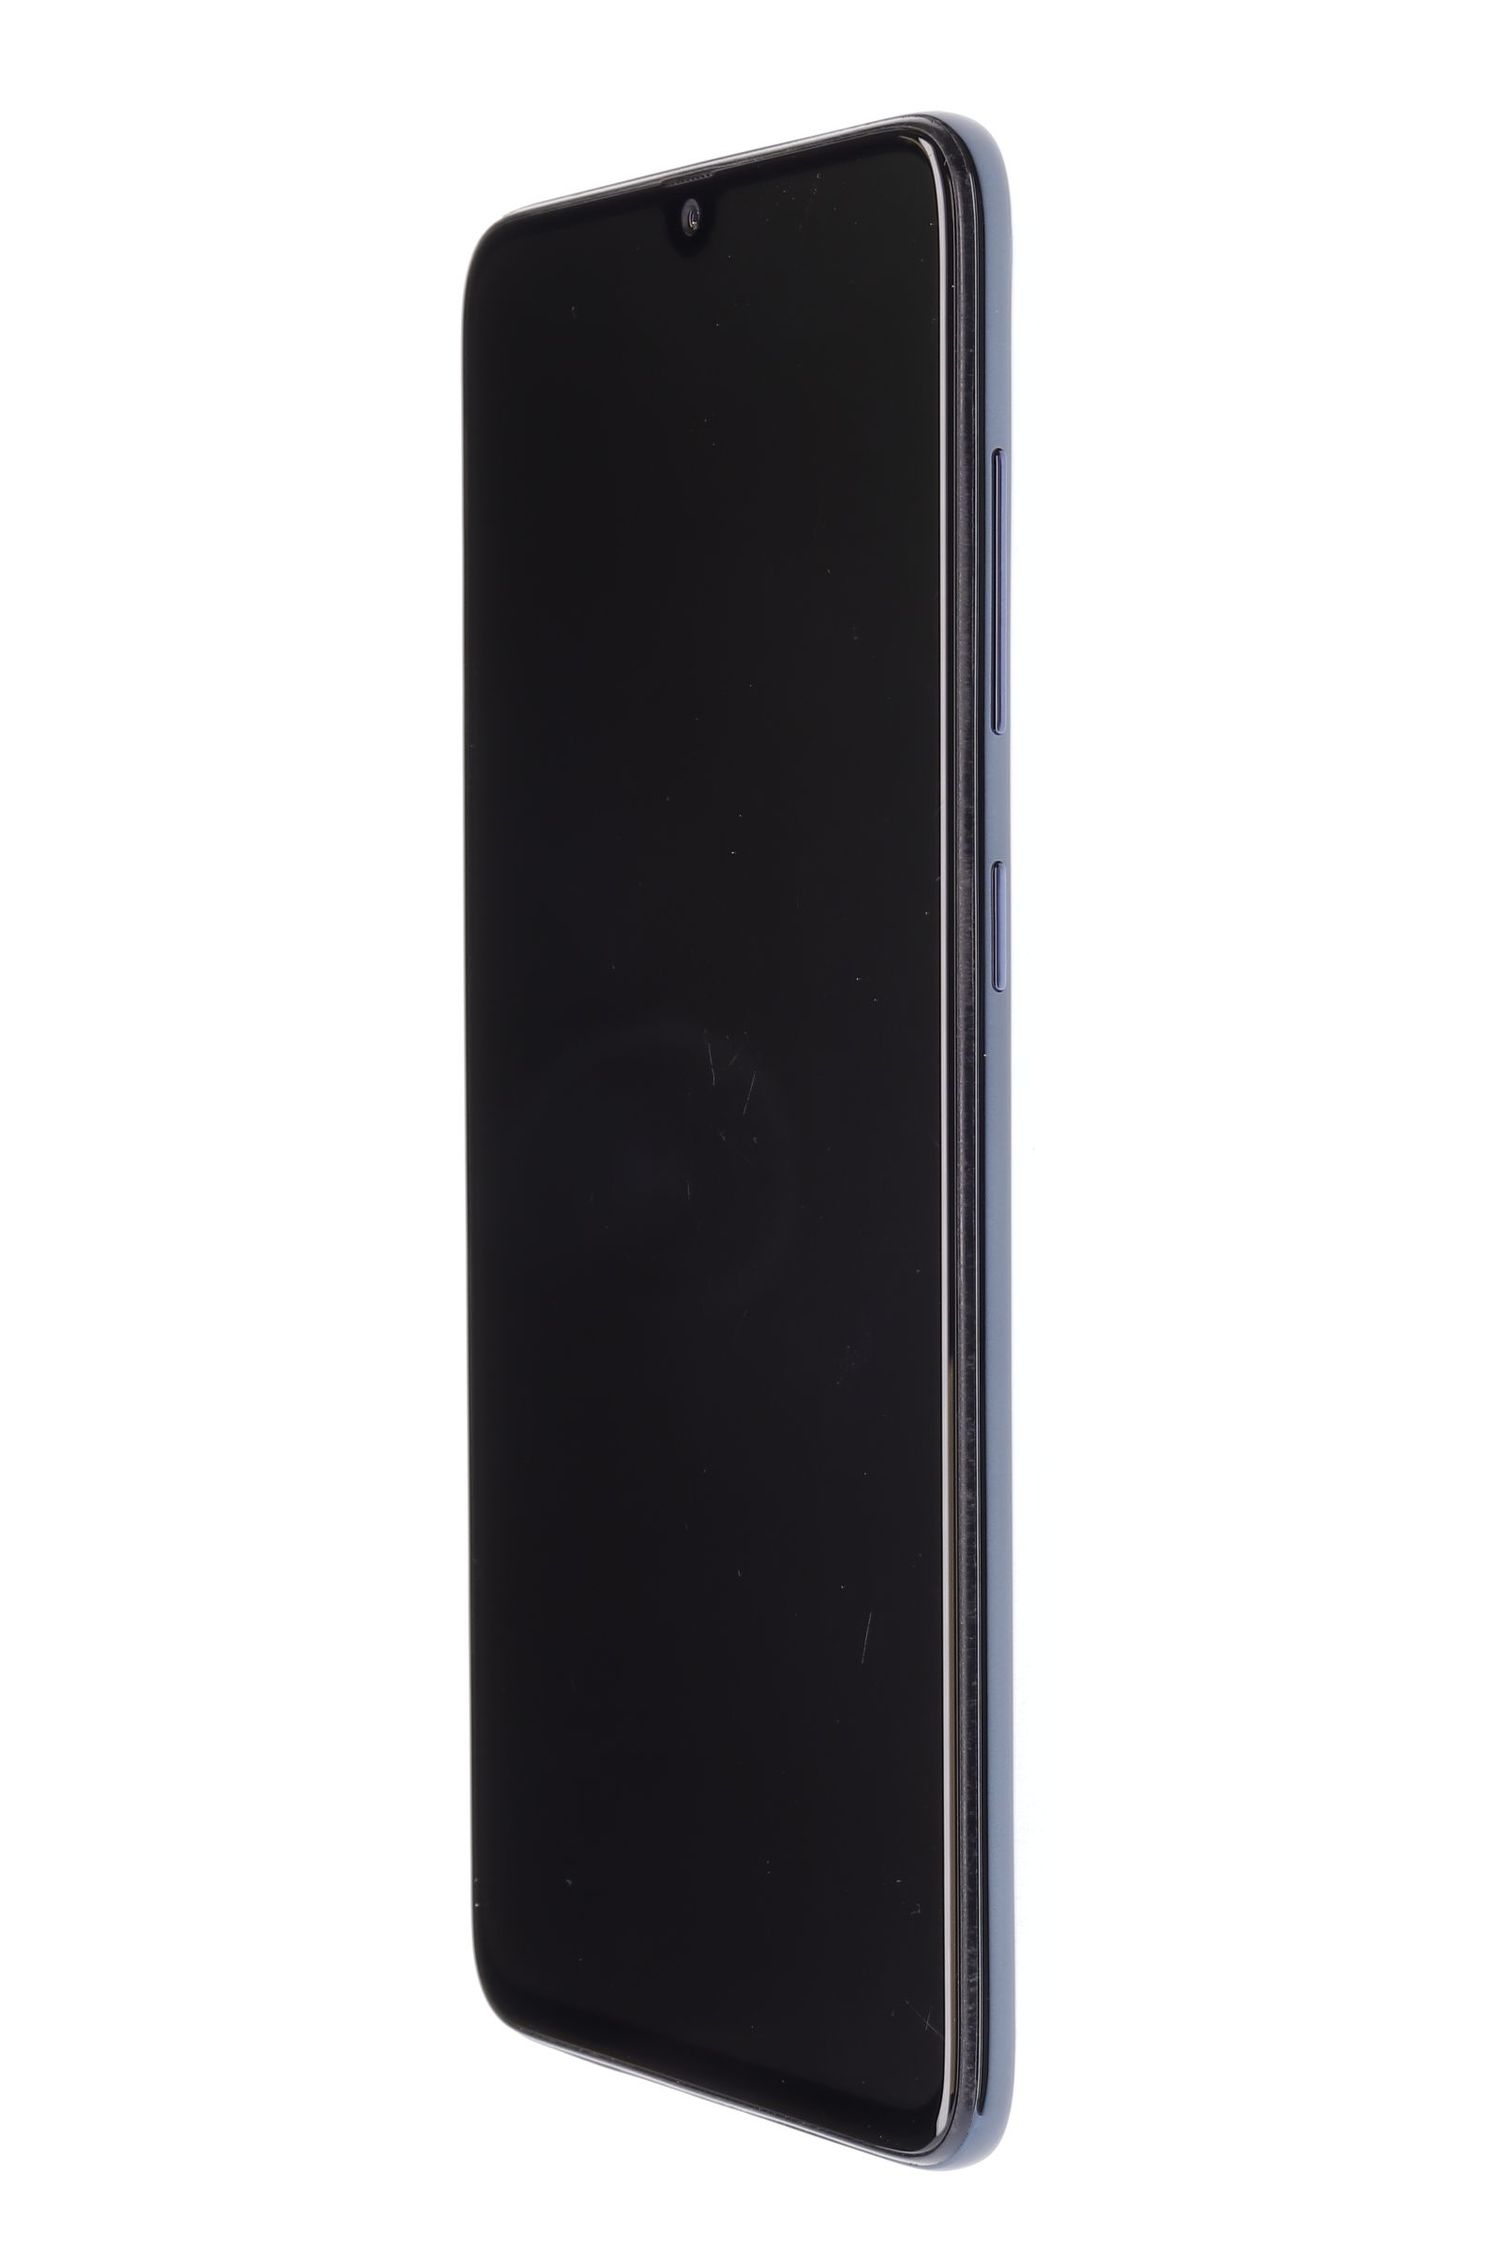 Мобилен телефон Samsung Galaxy A70 (2019) Dual Sim, Black, 128 GB, Excelent